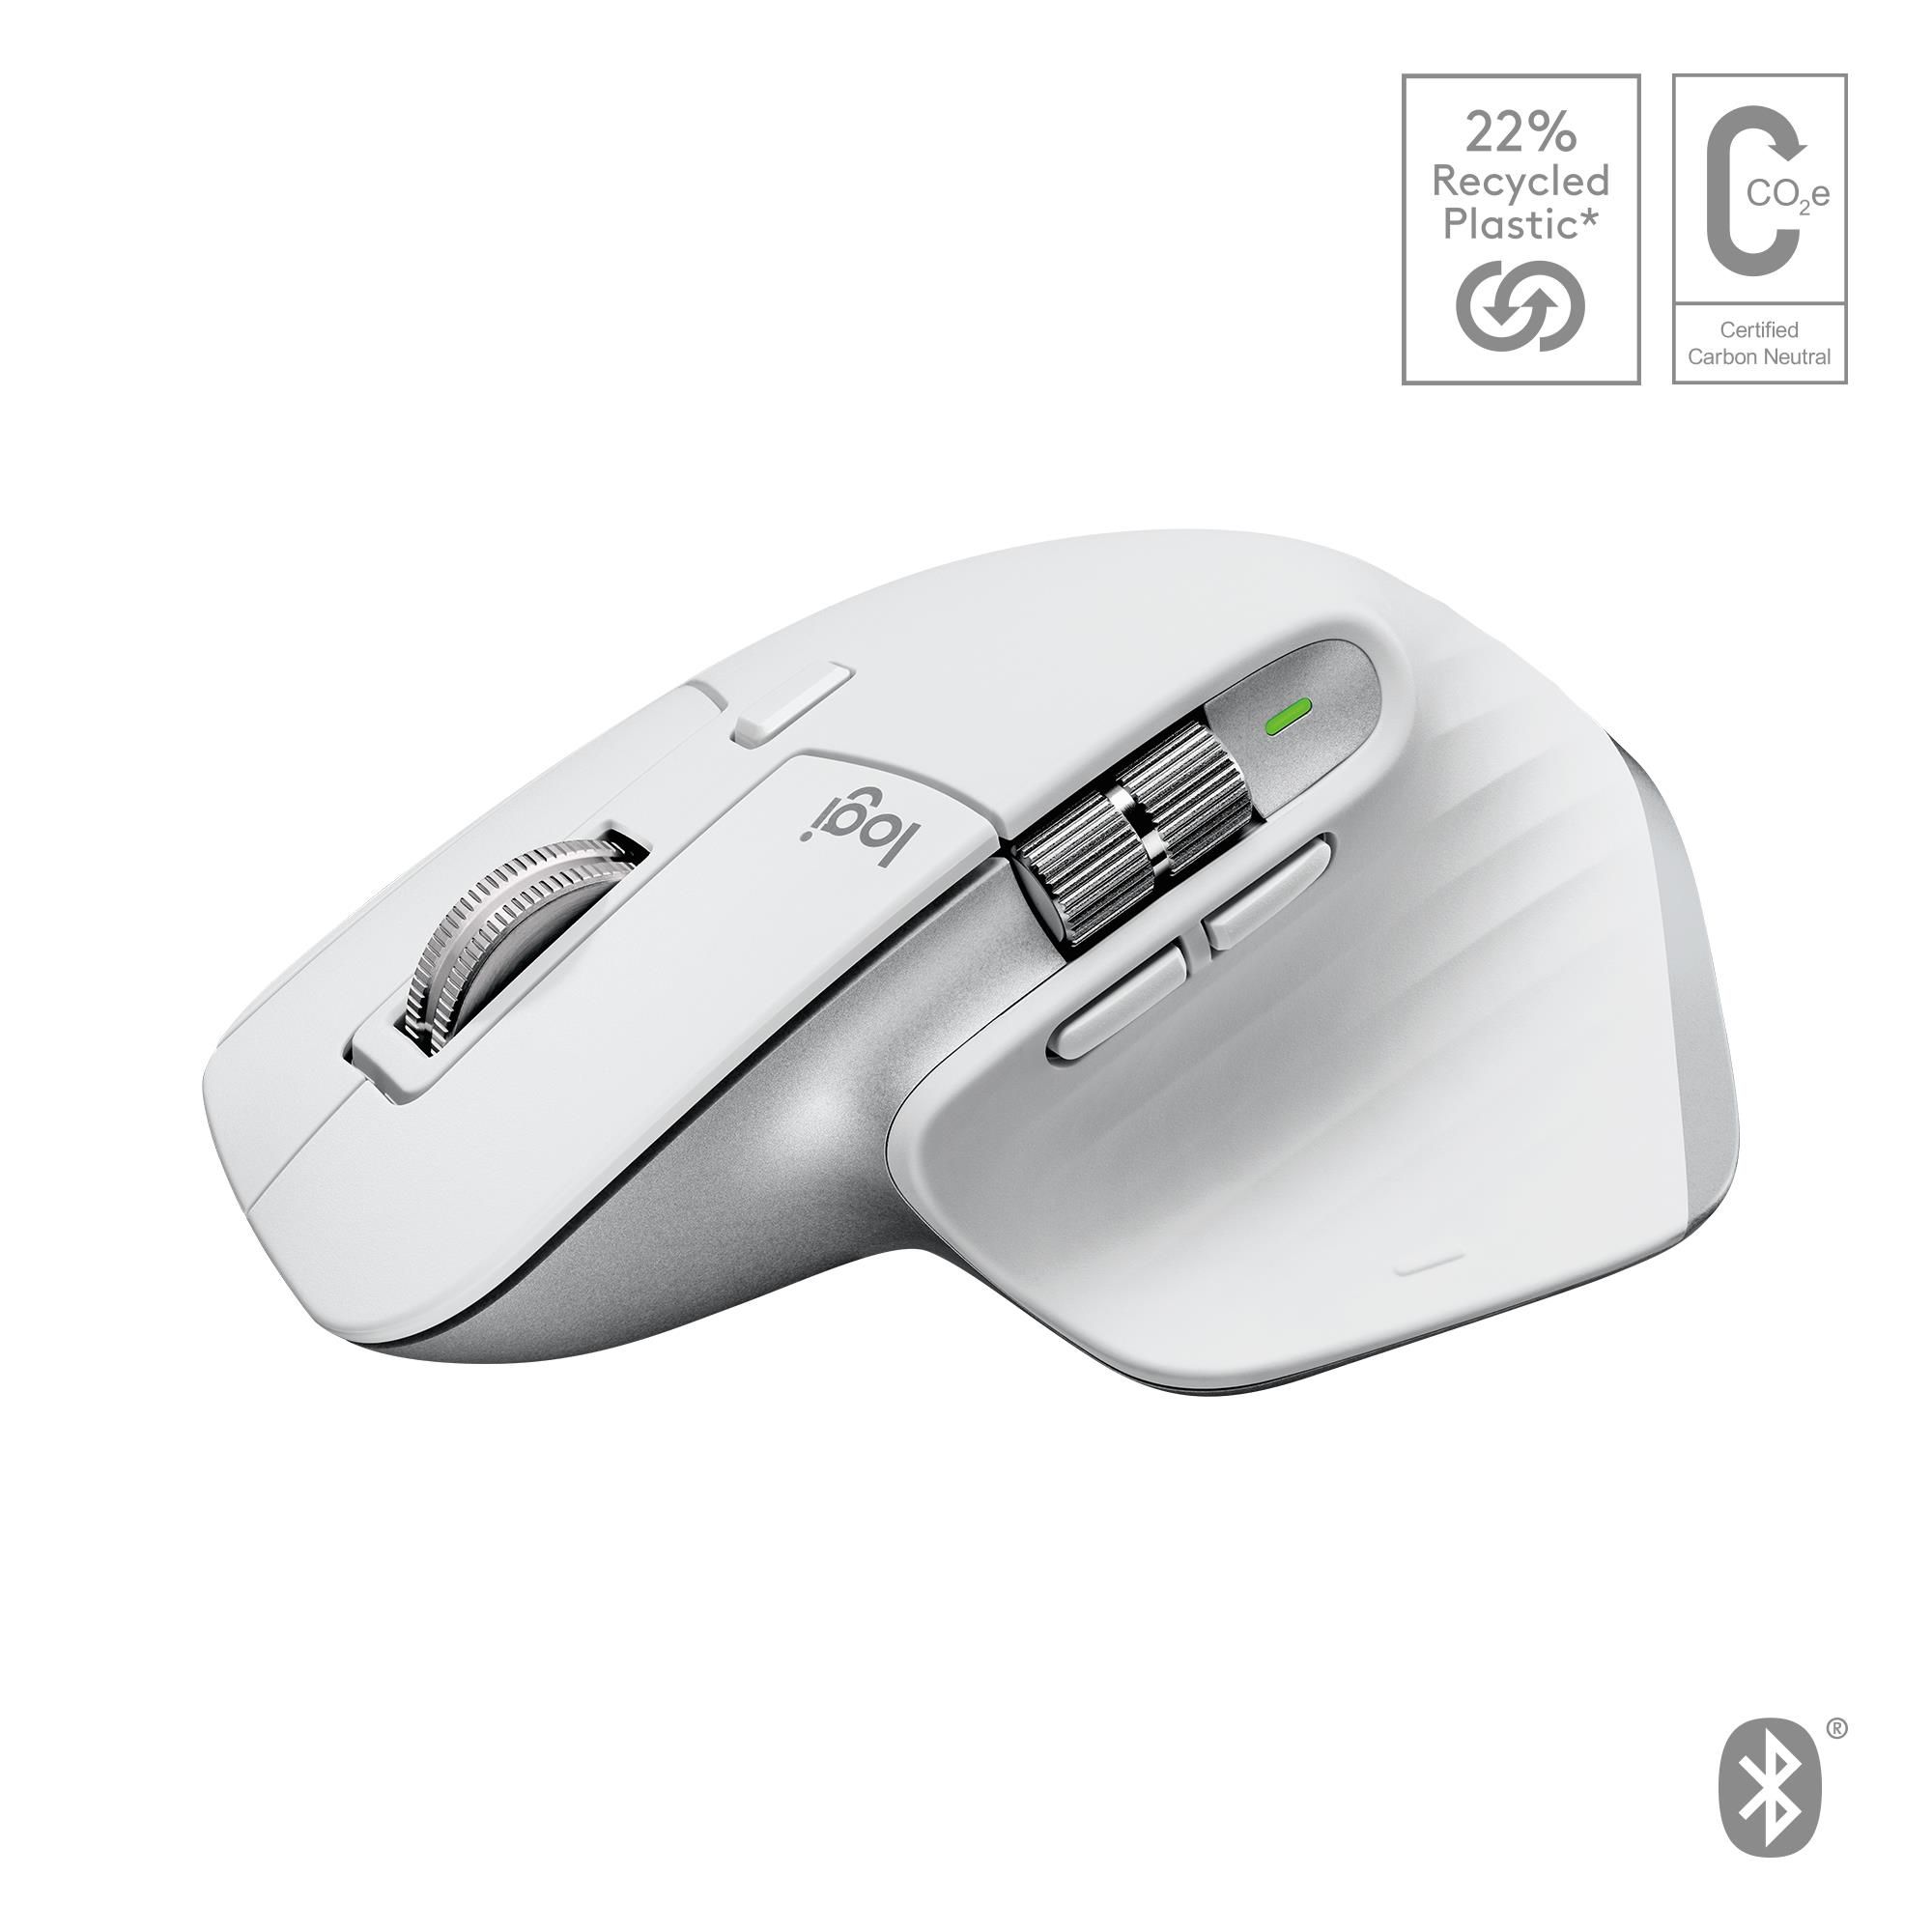 Mouse wireless ricaricabile: silenziosissimo ed economico (16€)